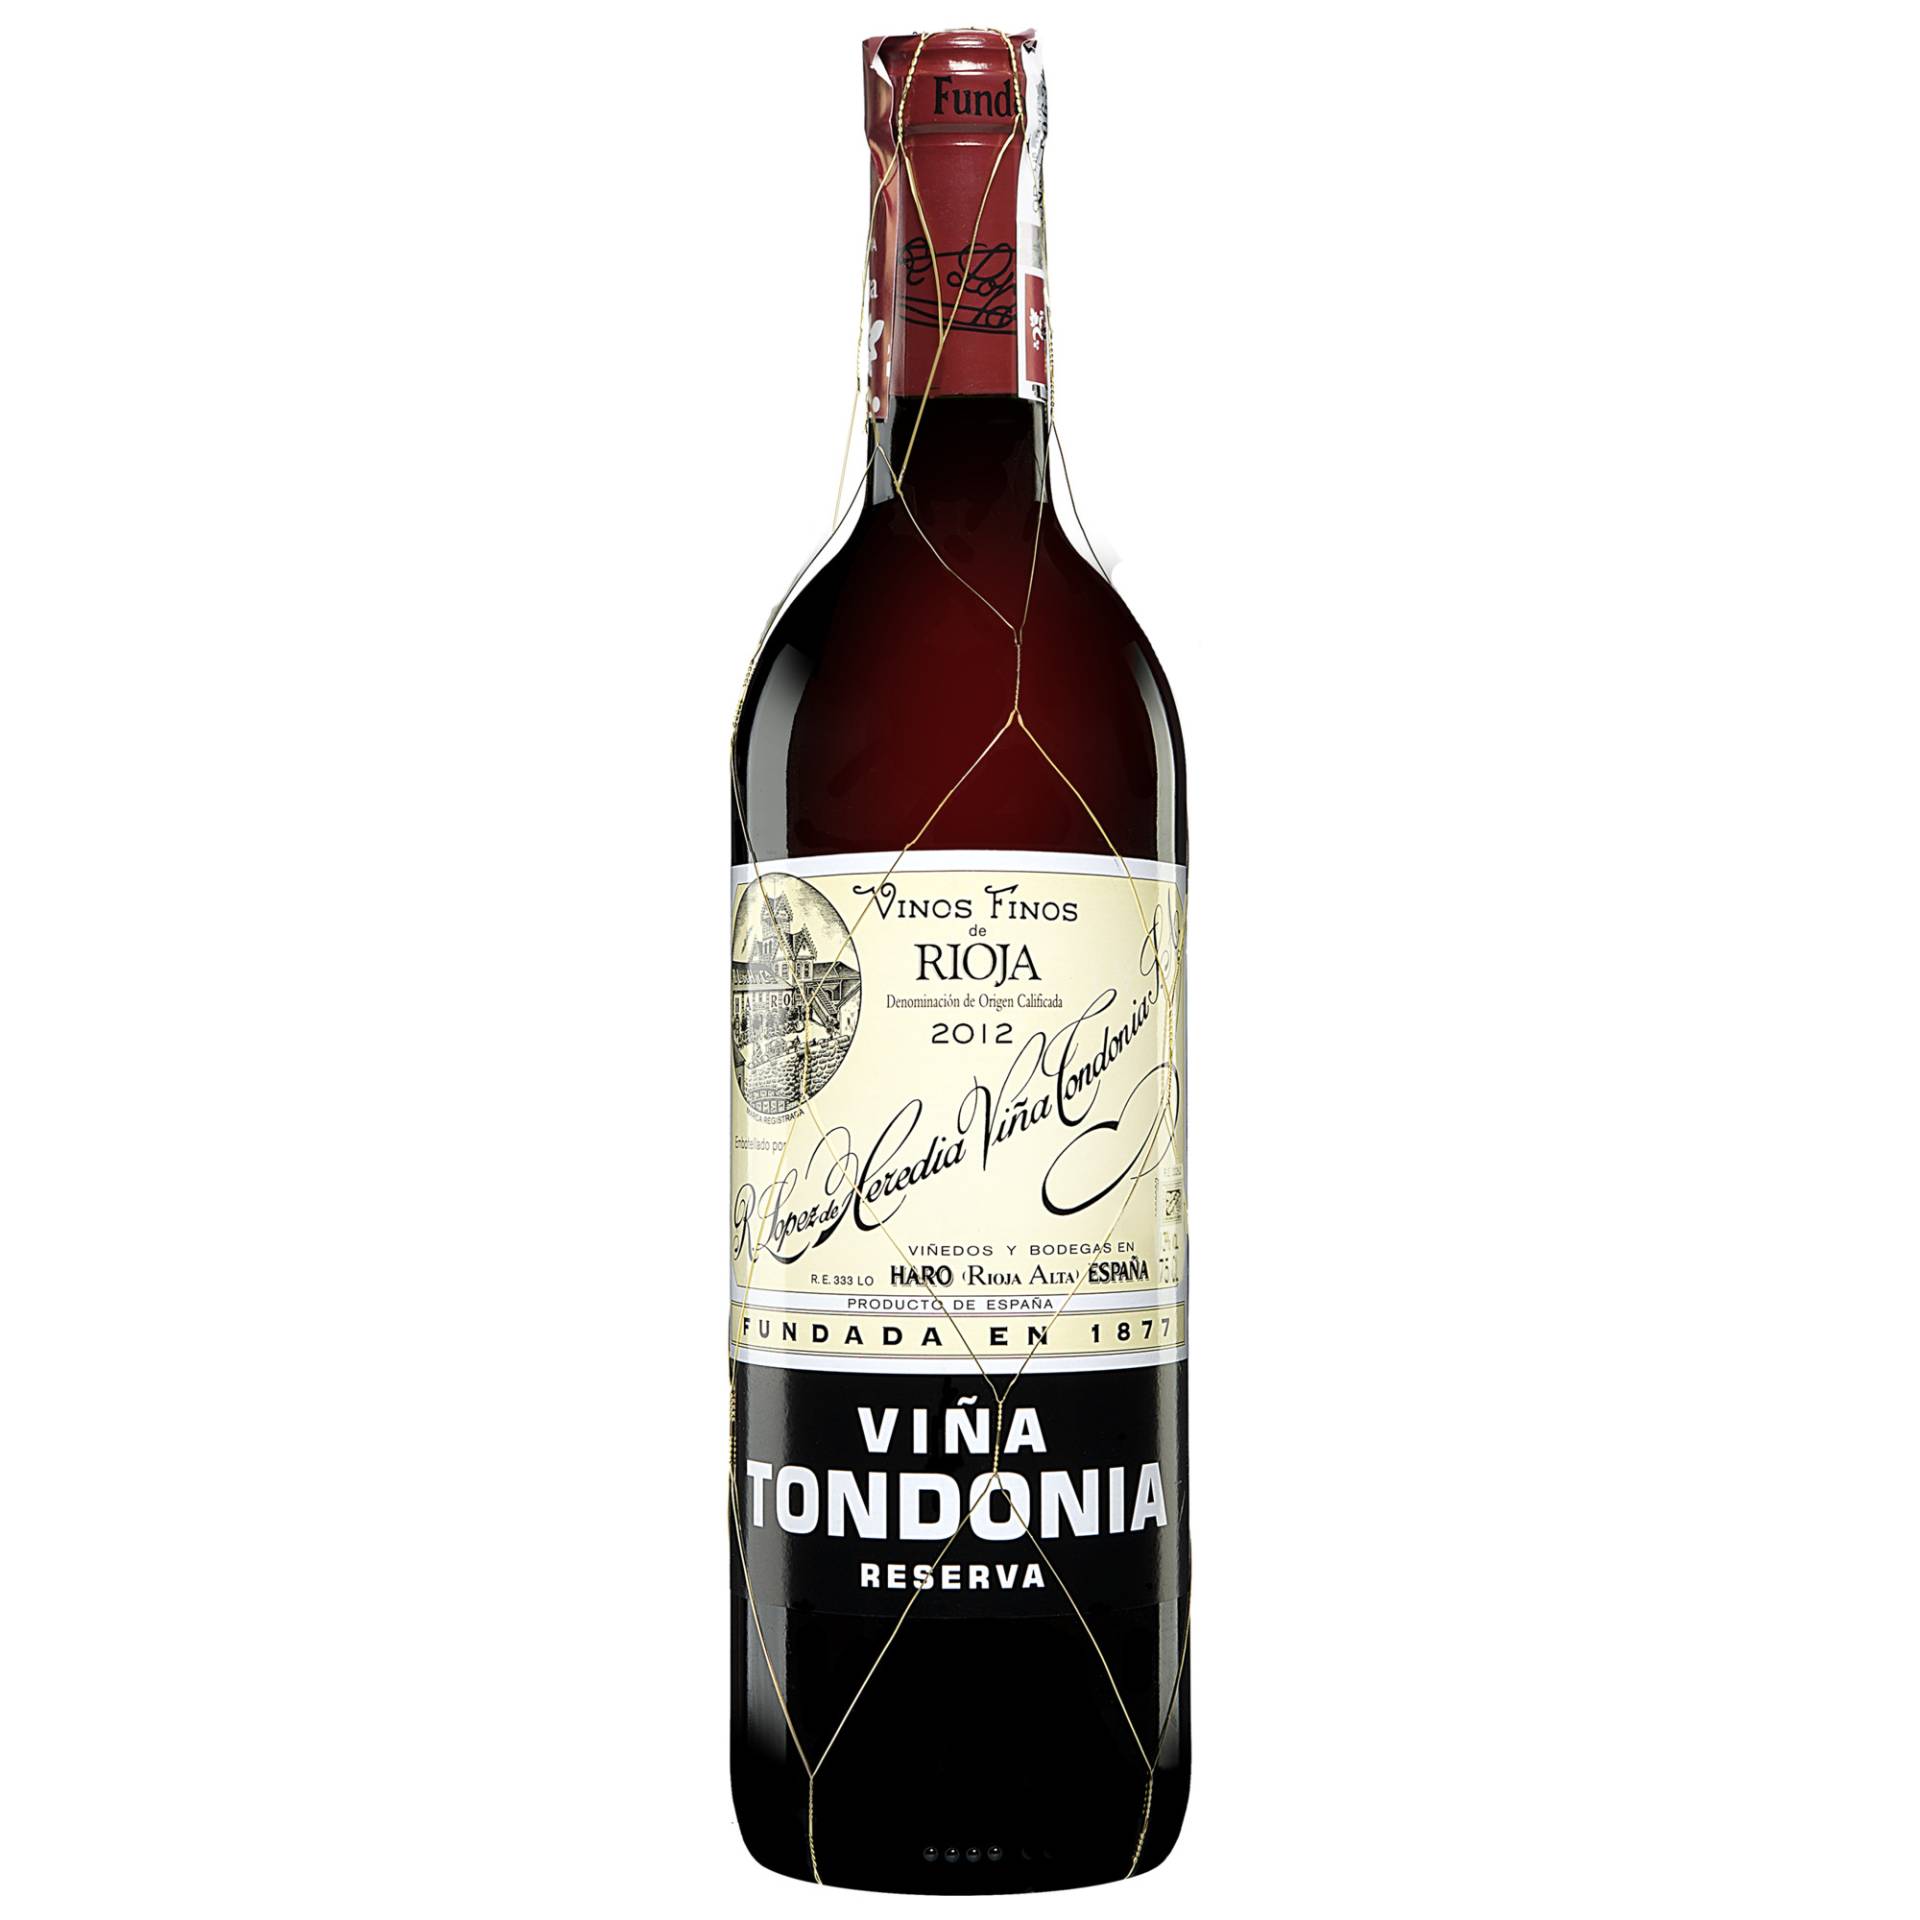 Tondonia »Viña Tondonia« Tinto Reserva 2012  0.75L 13% Vol. Rotwein Trocken aus Spanien von López de Heredia - Viña Tondonia